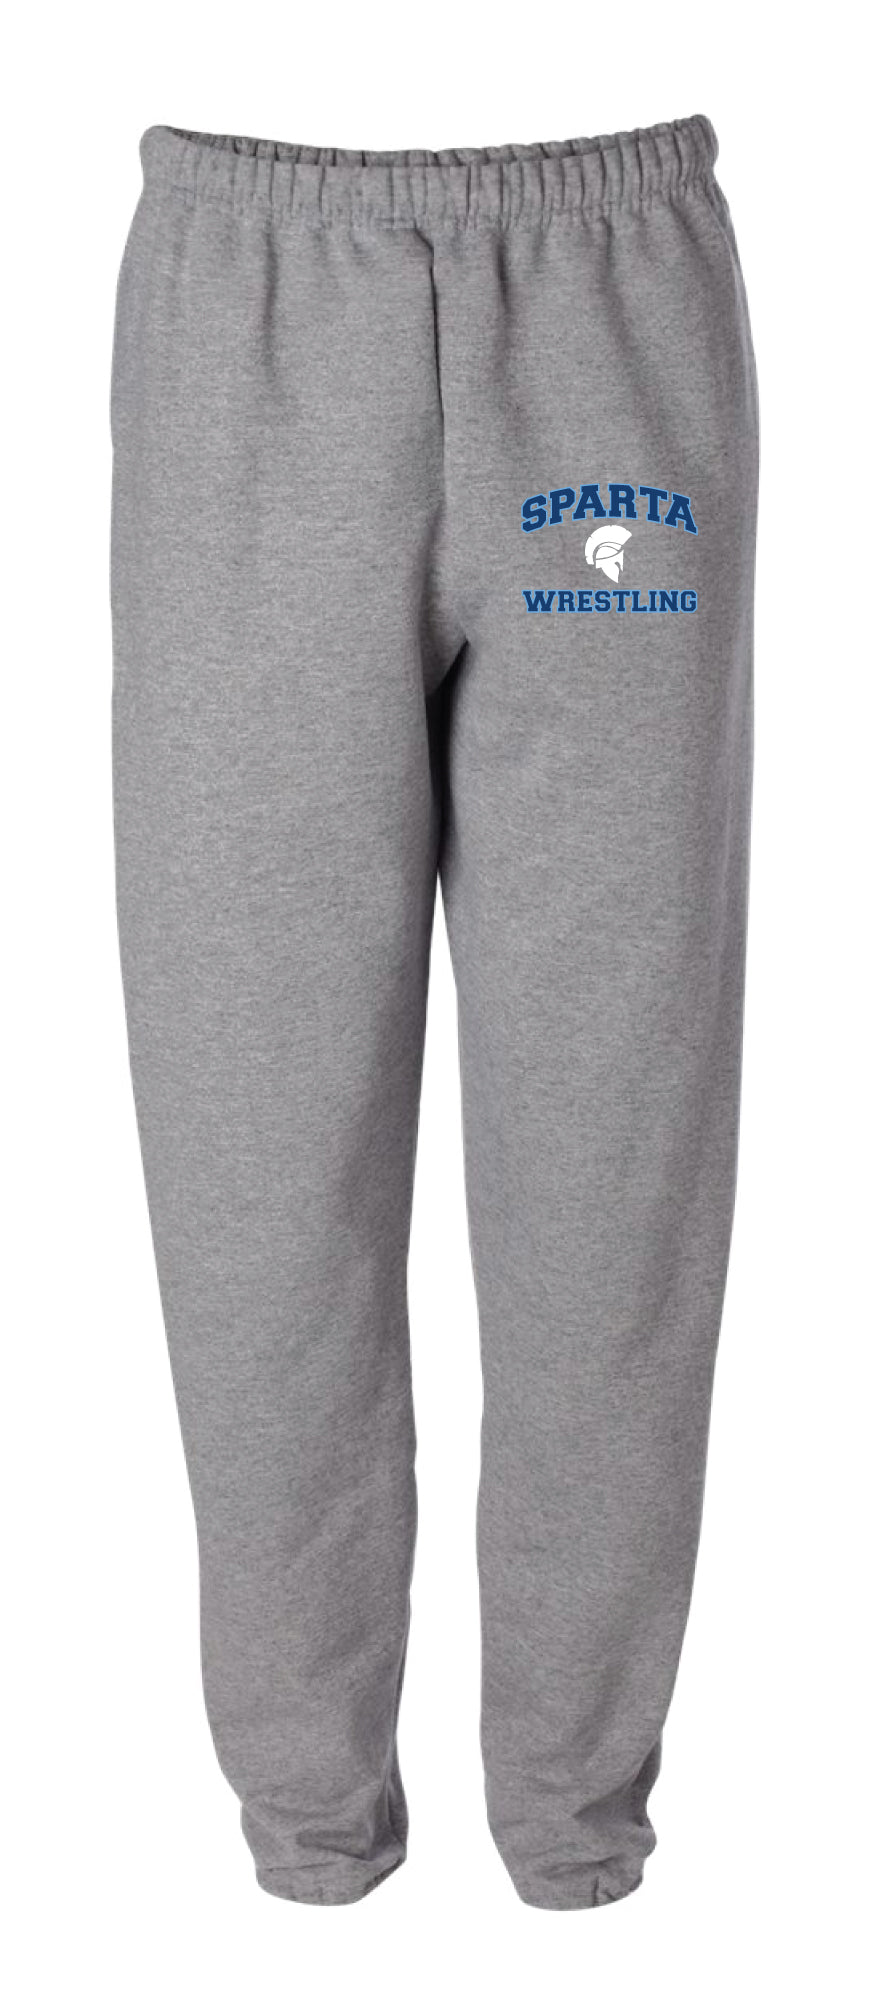 Sparta HS Wrestling Cotton Sweatpants - Grey - 5KounT2018